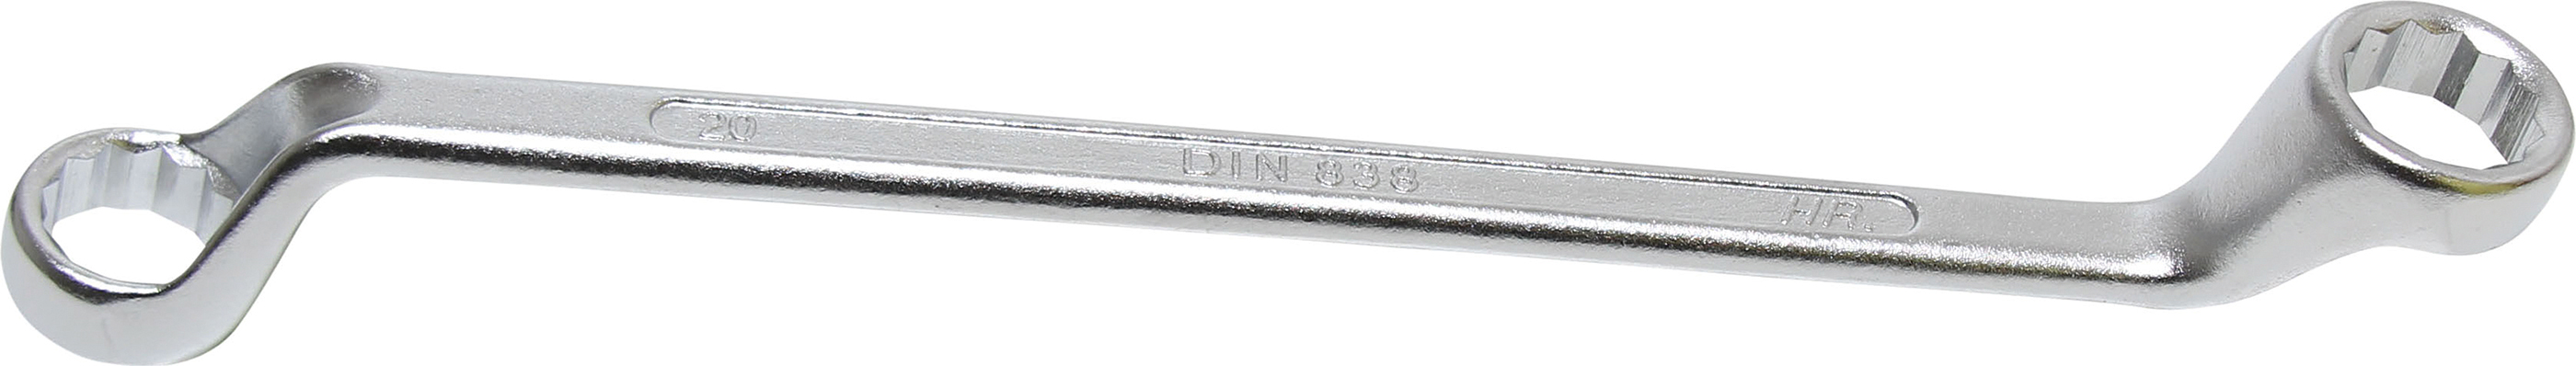 BGS 1214-20x22 Cheie inelara dubla cu cot, 20x22 mm